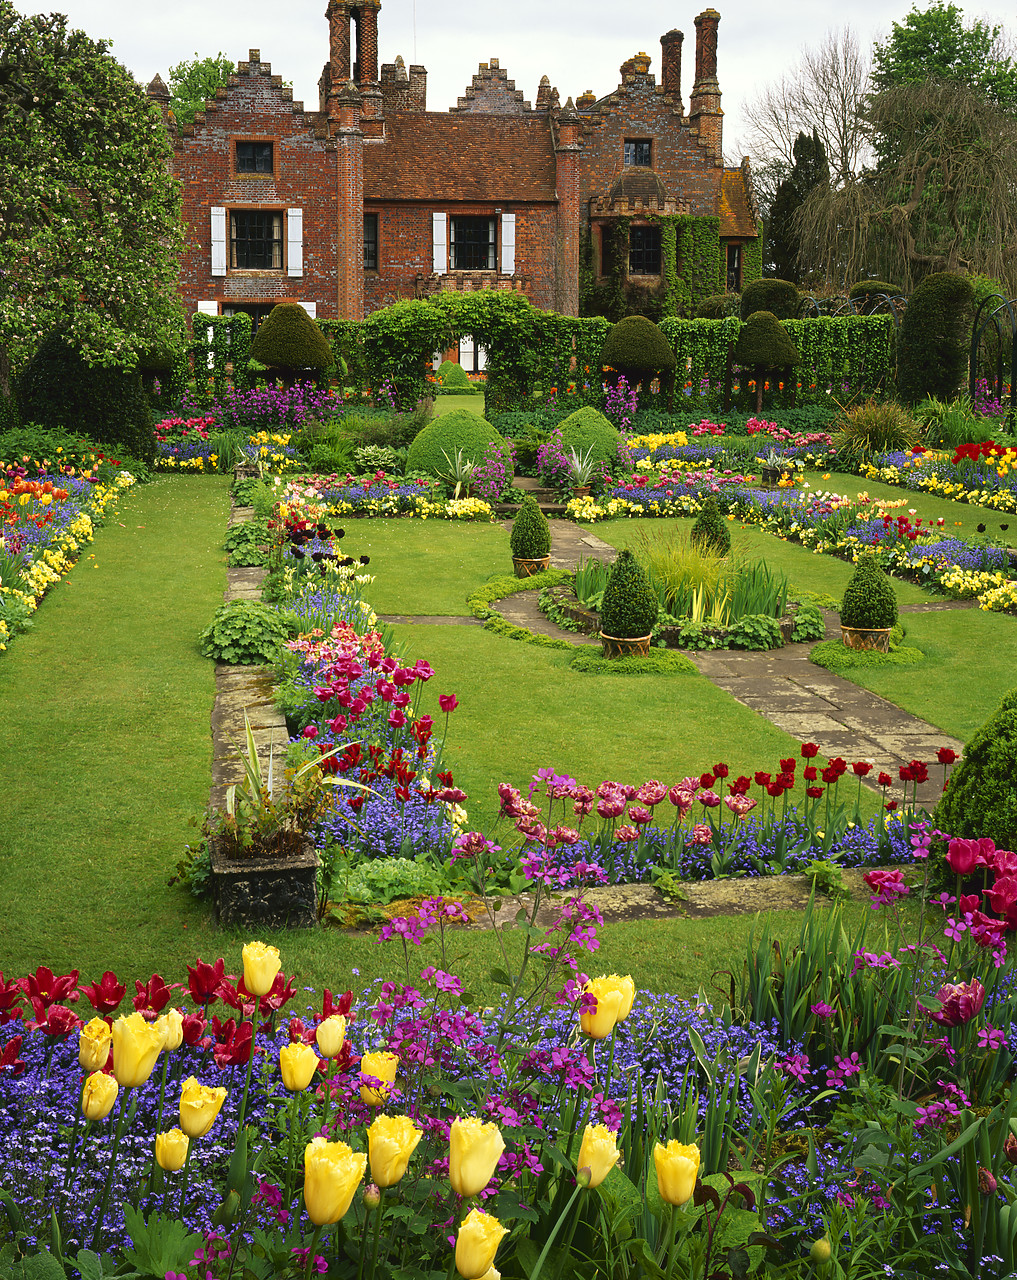 #050209-4 - Chenies Manor Garden in Spring, Chenies, Buckinghamshire, England